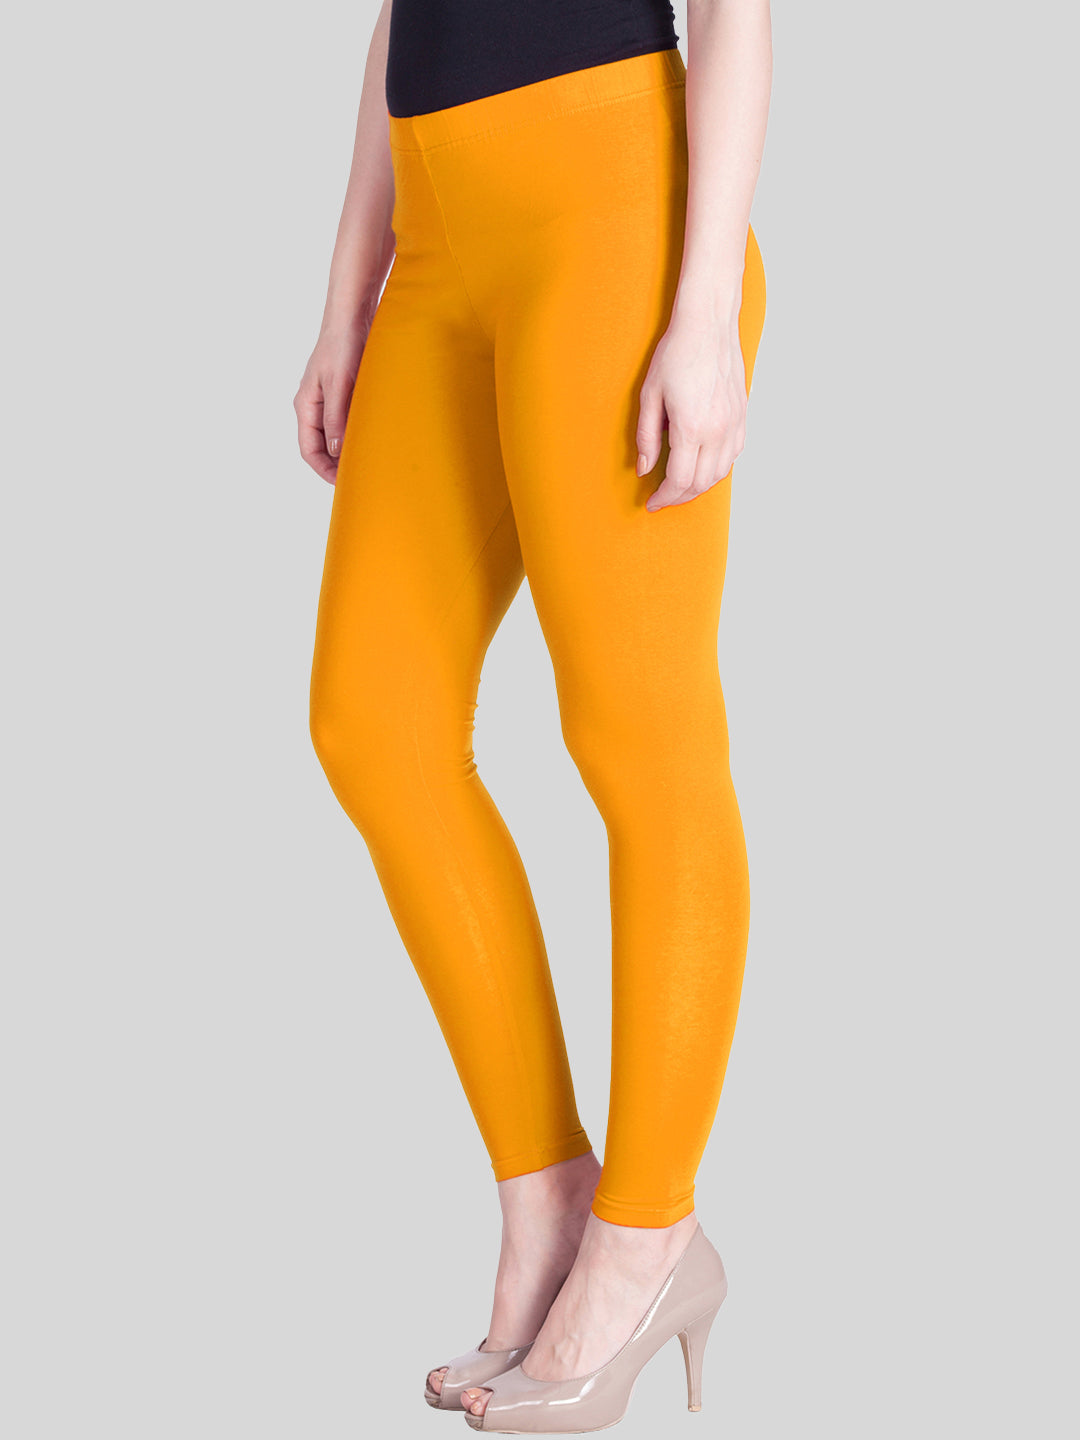 Lyra Pastel Yellow Ankle Length Legging for Women-LYRAA169